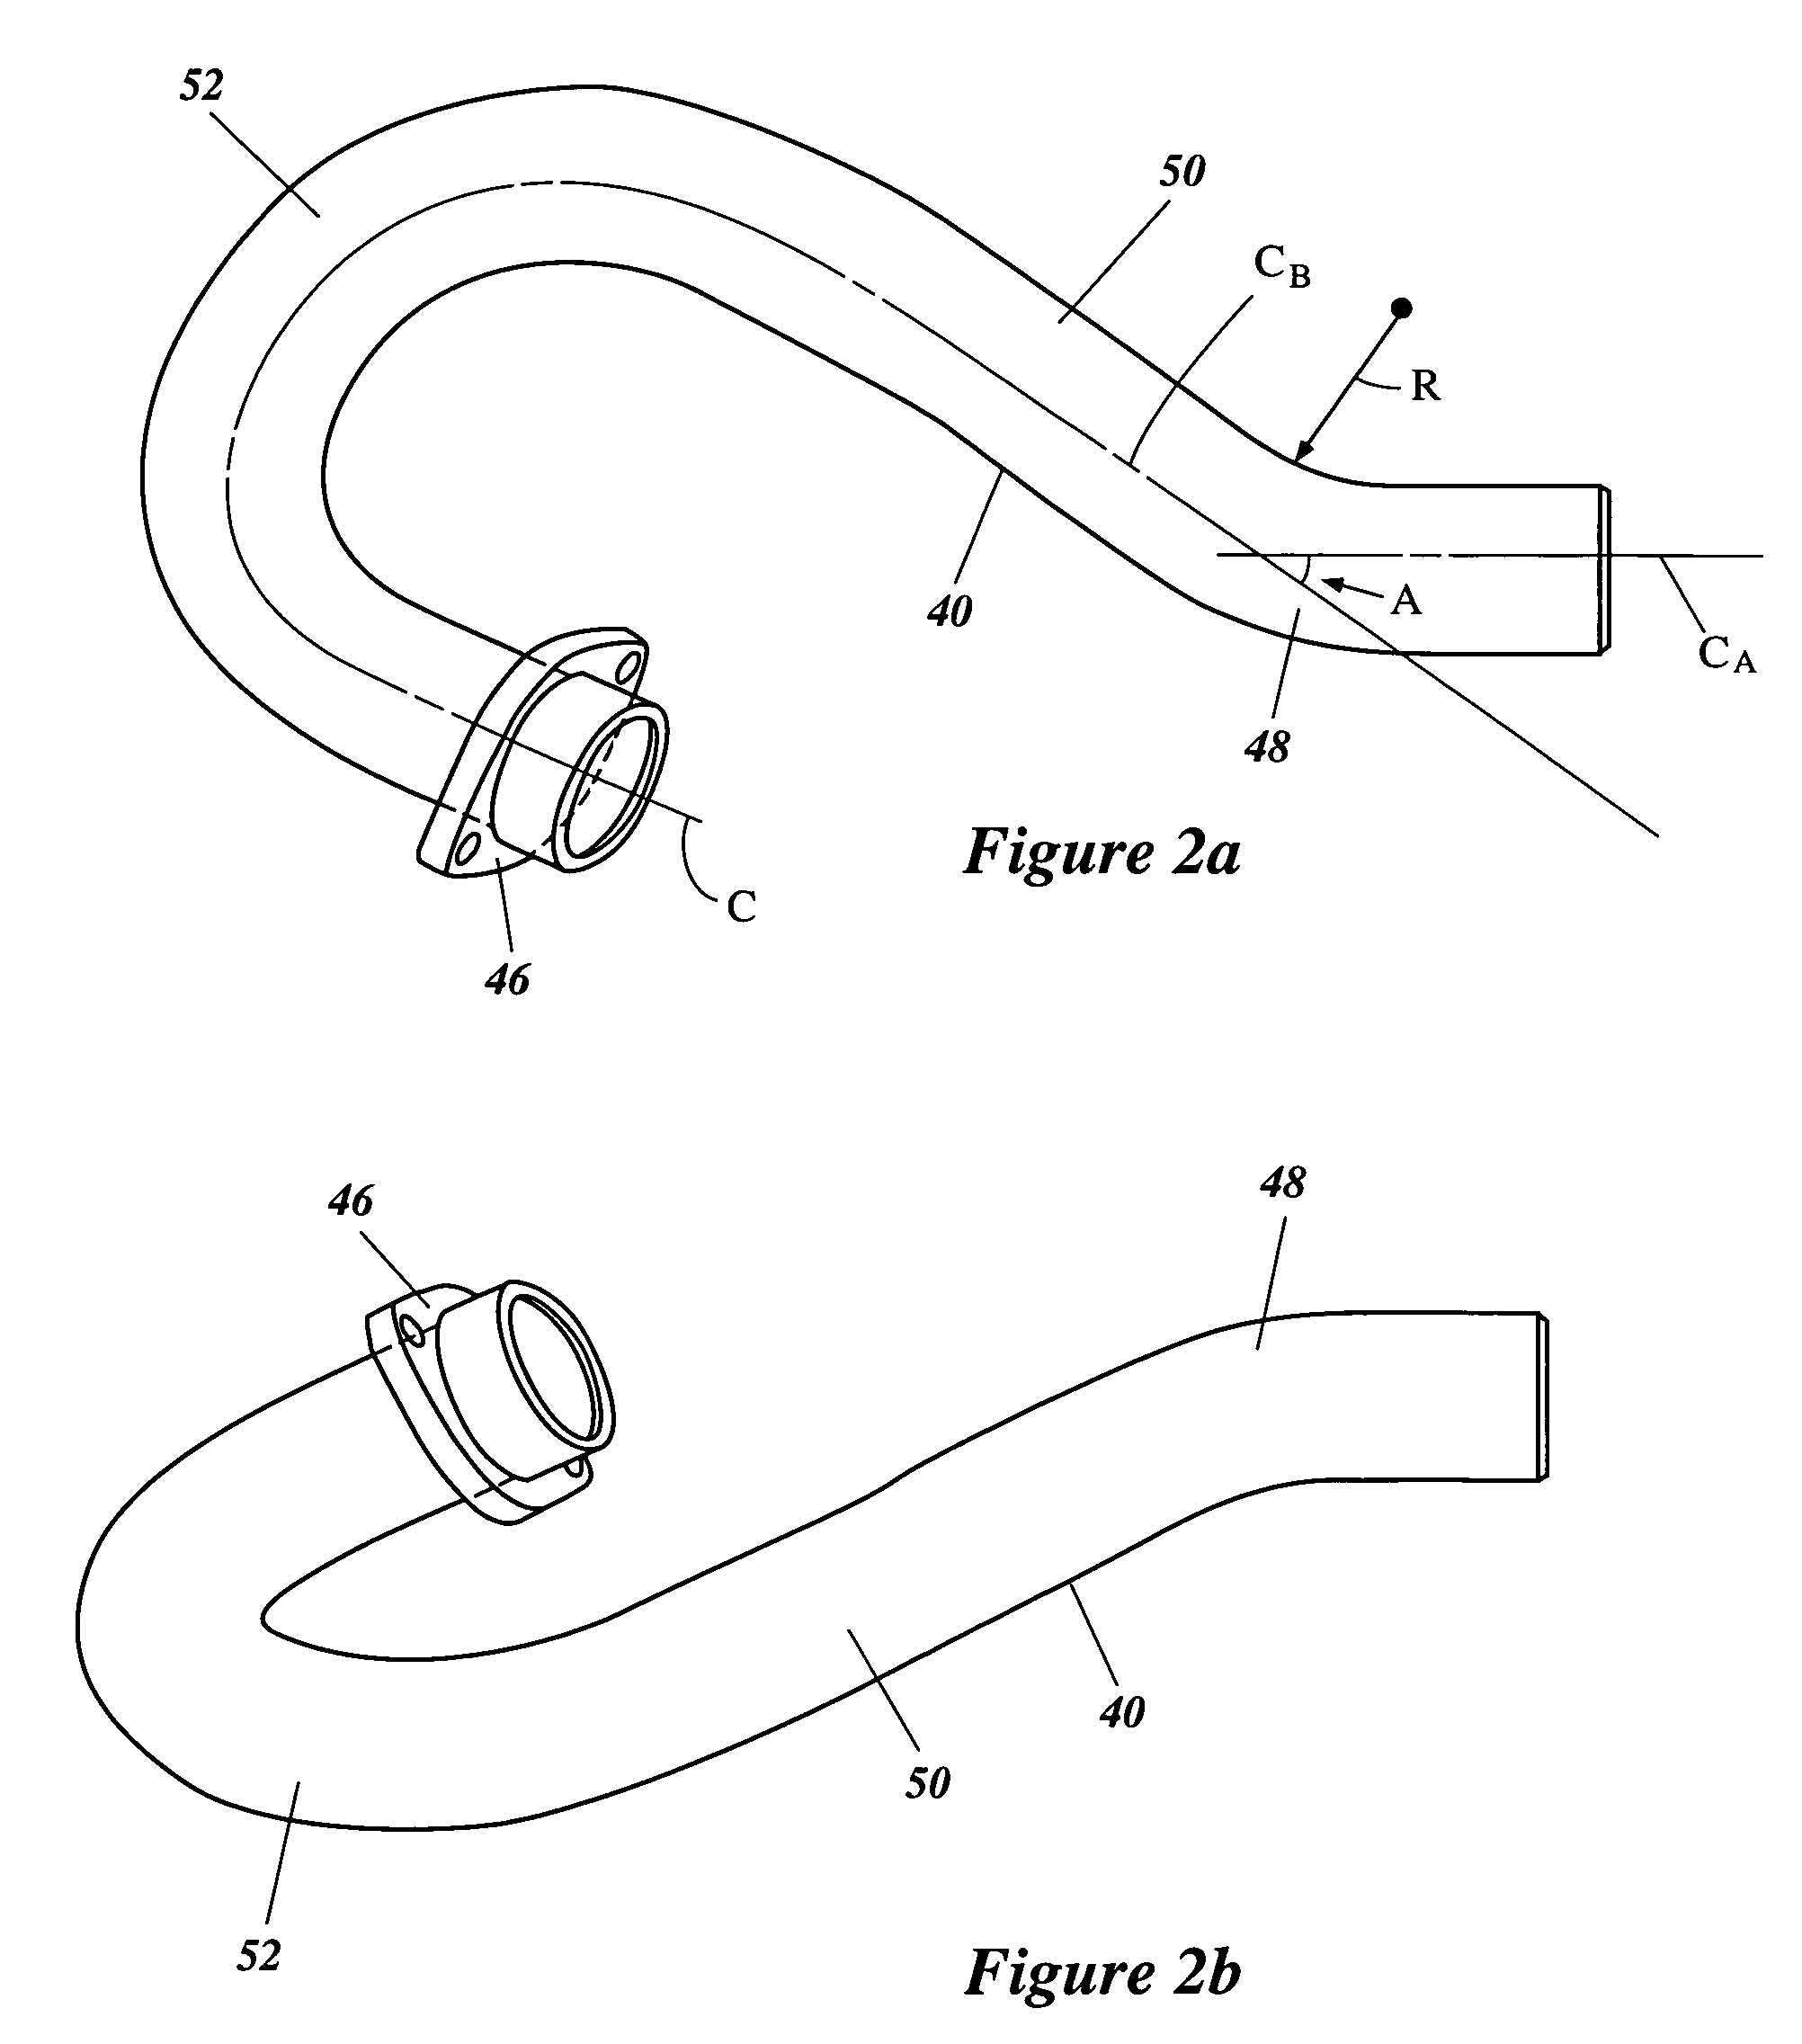 Pipe bending apparatus and method